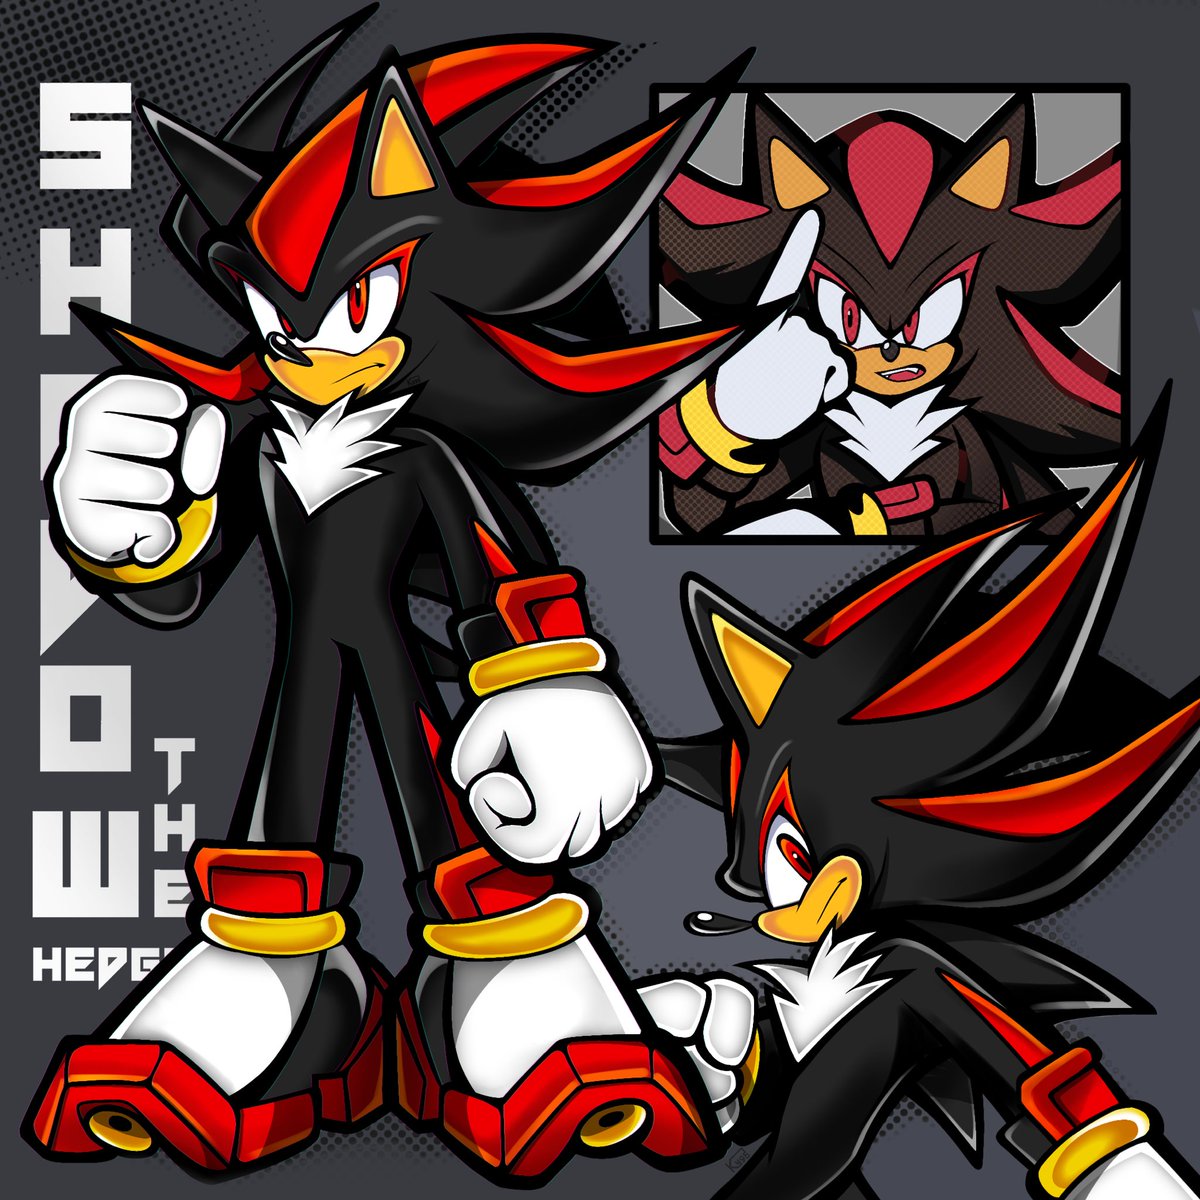 #ShadowTheHedgehog Tried to draw Shadow using the Uekawa style